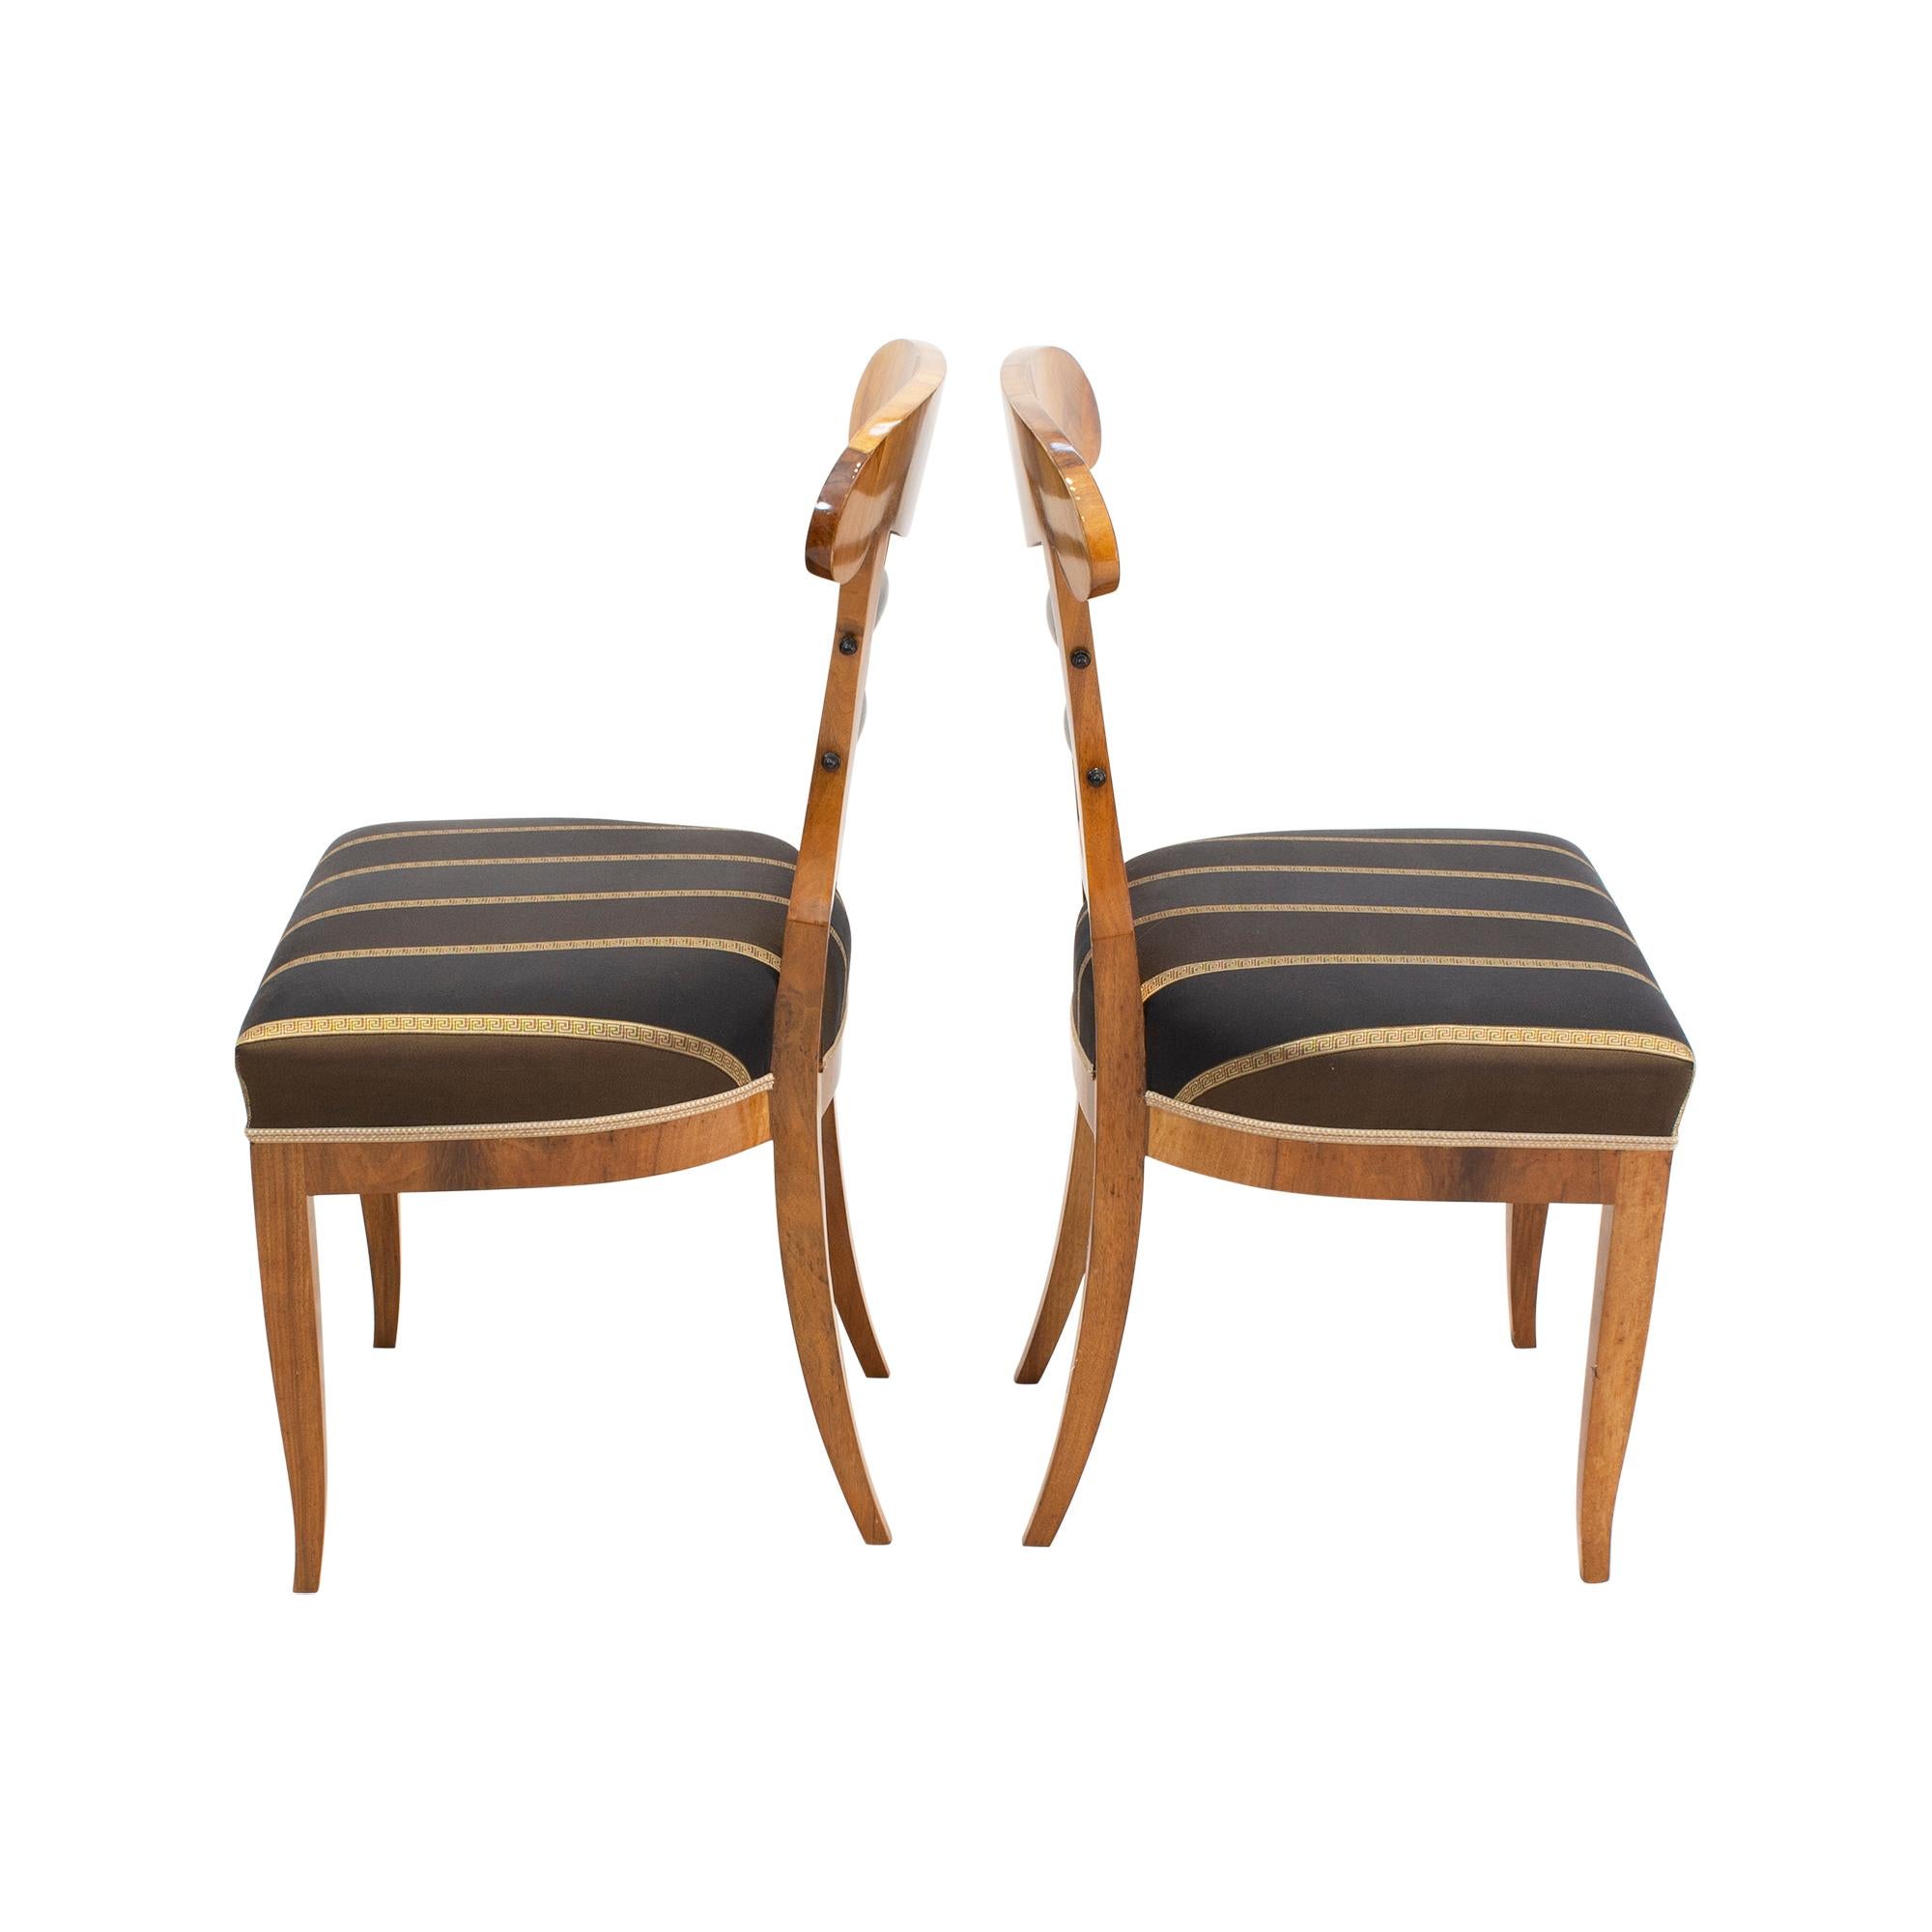 Biedermeier-Sessel aus Nussbaumholz, 19. Jahrhundert, Paar (Poliert) im Angebot